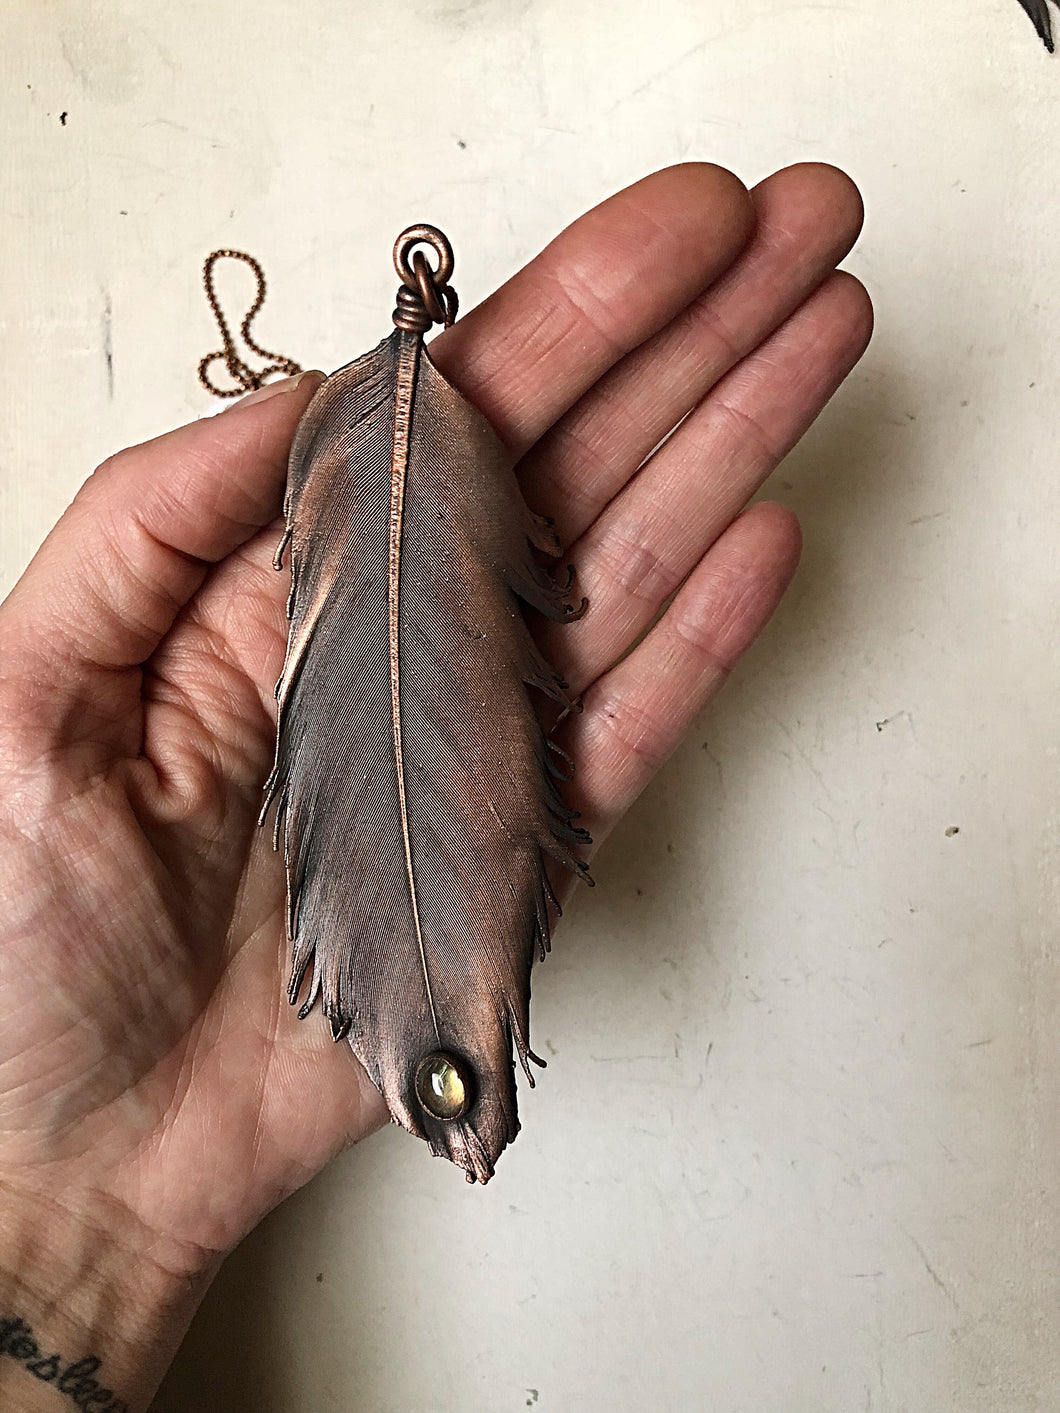 Electroformed Feather and Labradorite Necklace #1 - Ready to Ship